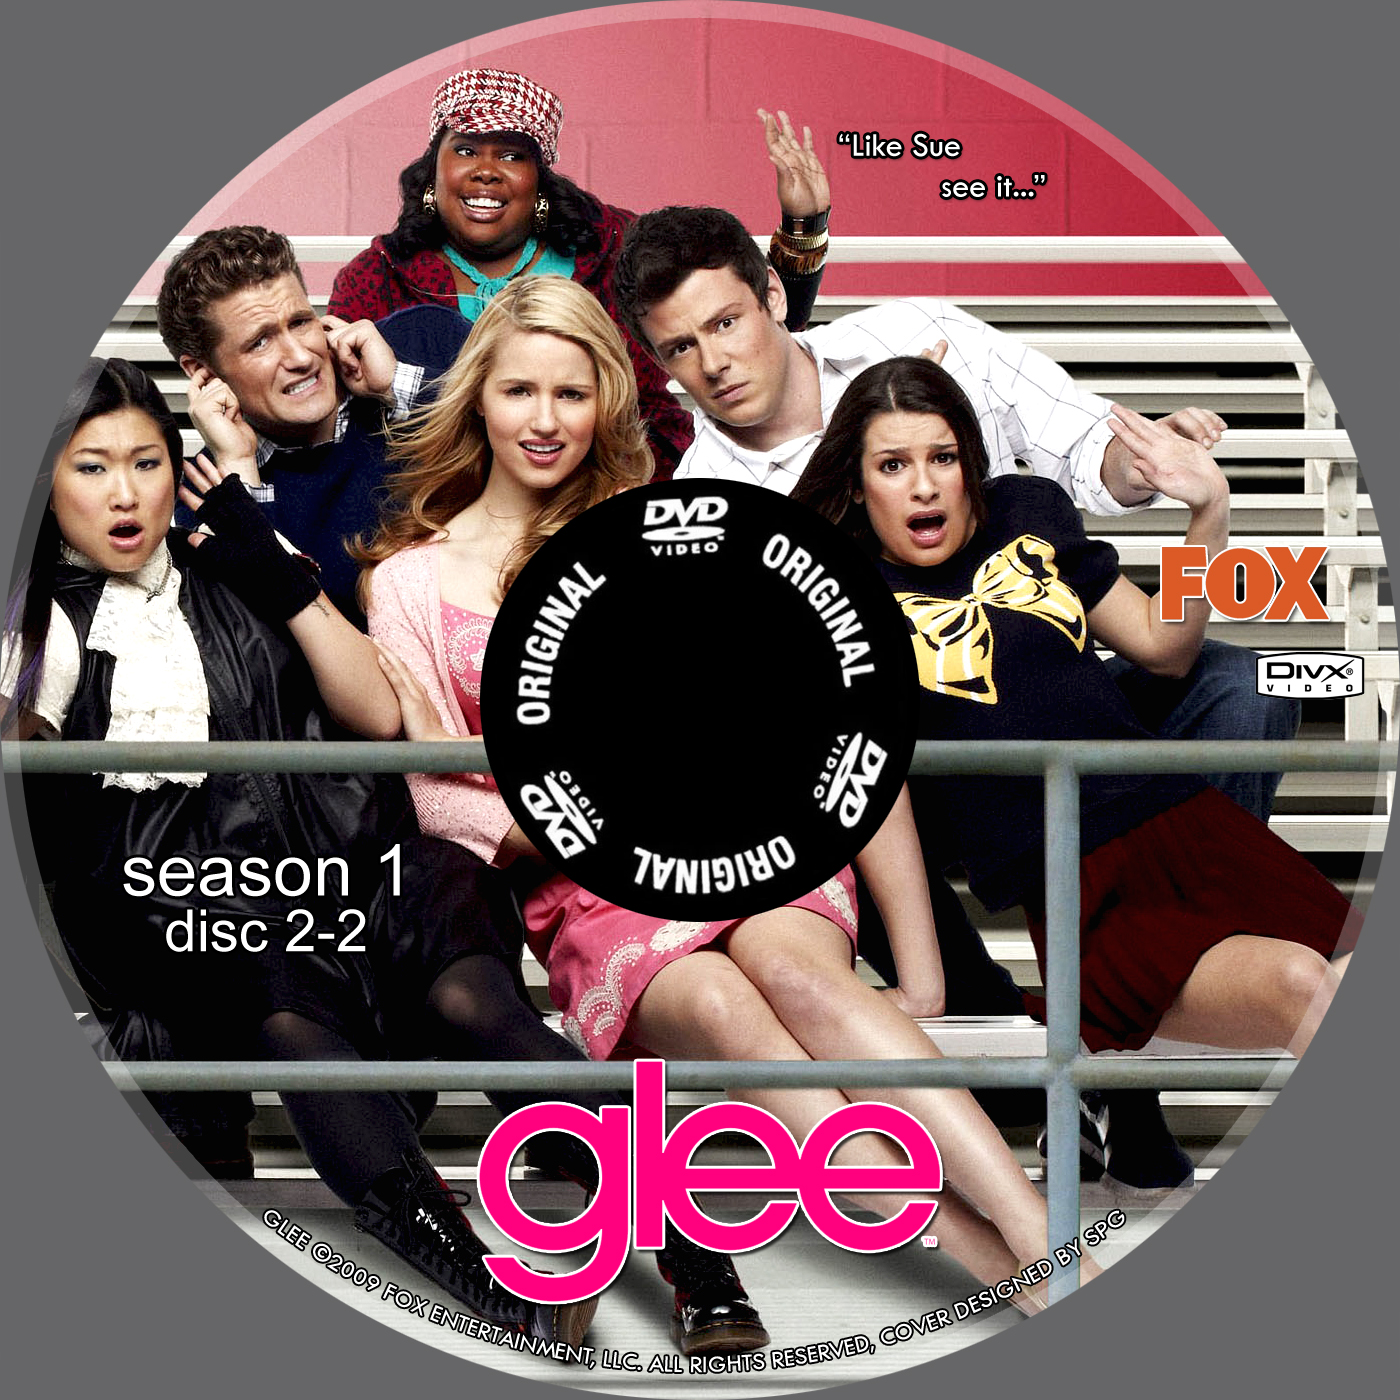 Glee DivX DVD Label 2 by spg1105 on DeviantArt